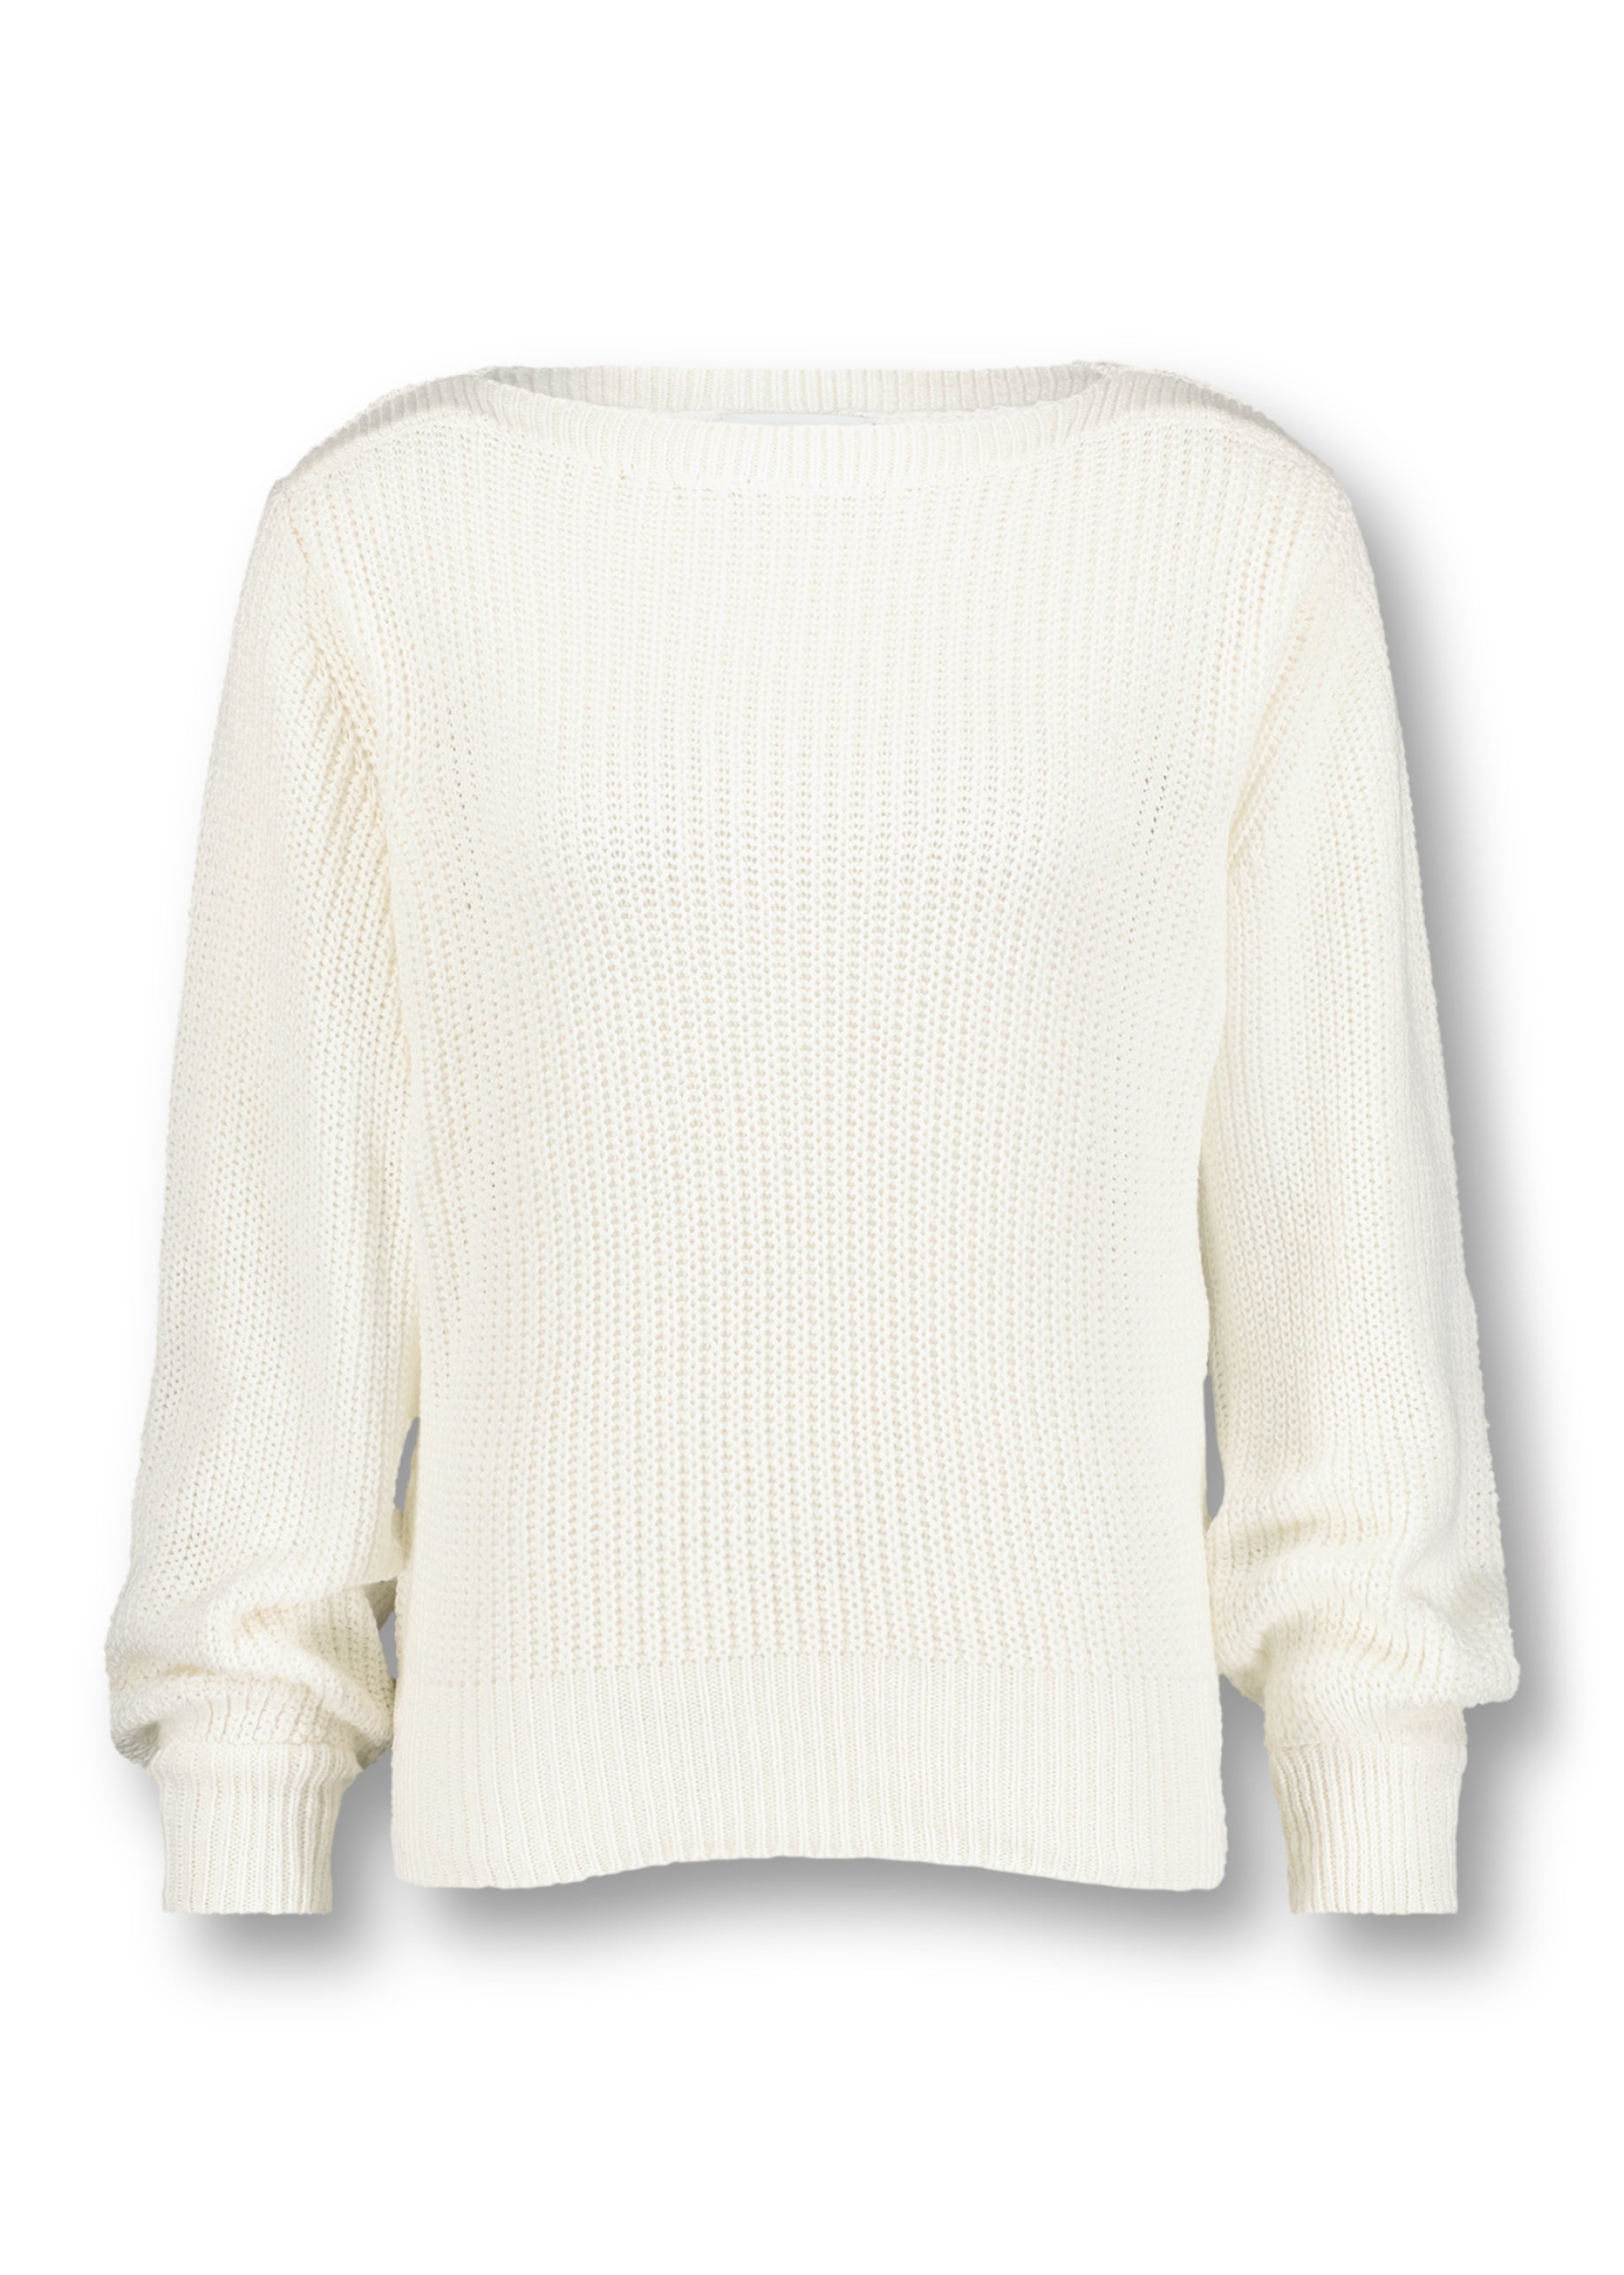 Solis Sweater - White - Packshot - Sweater - Simple